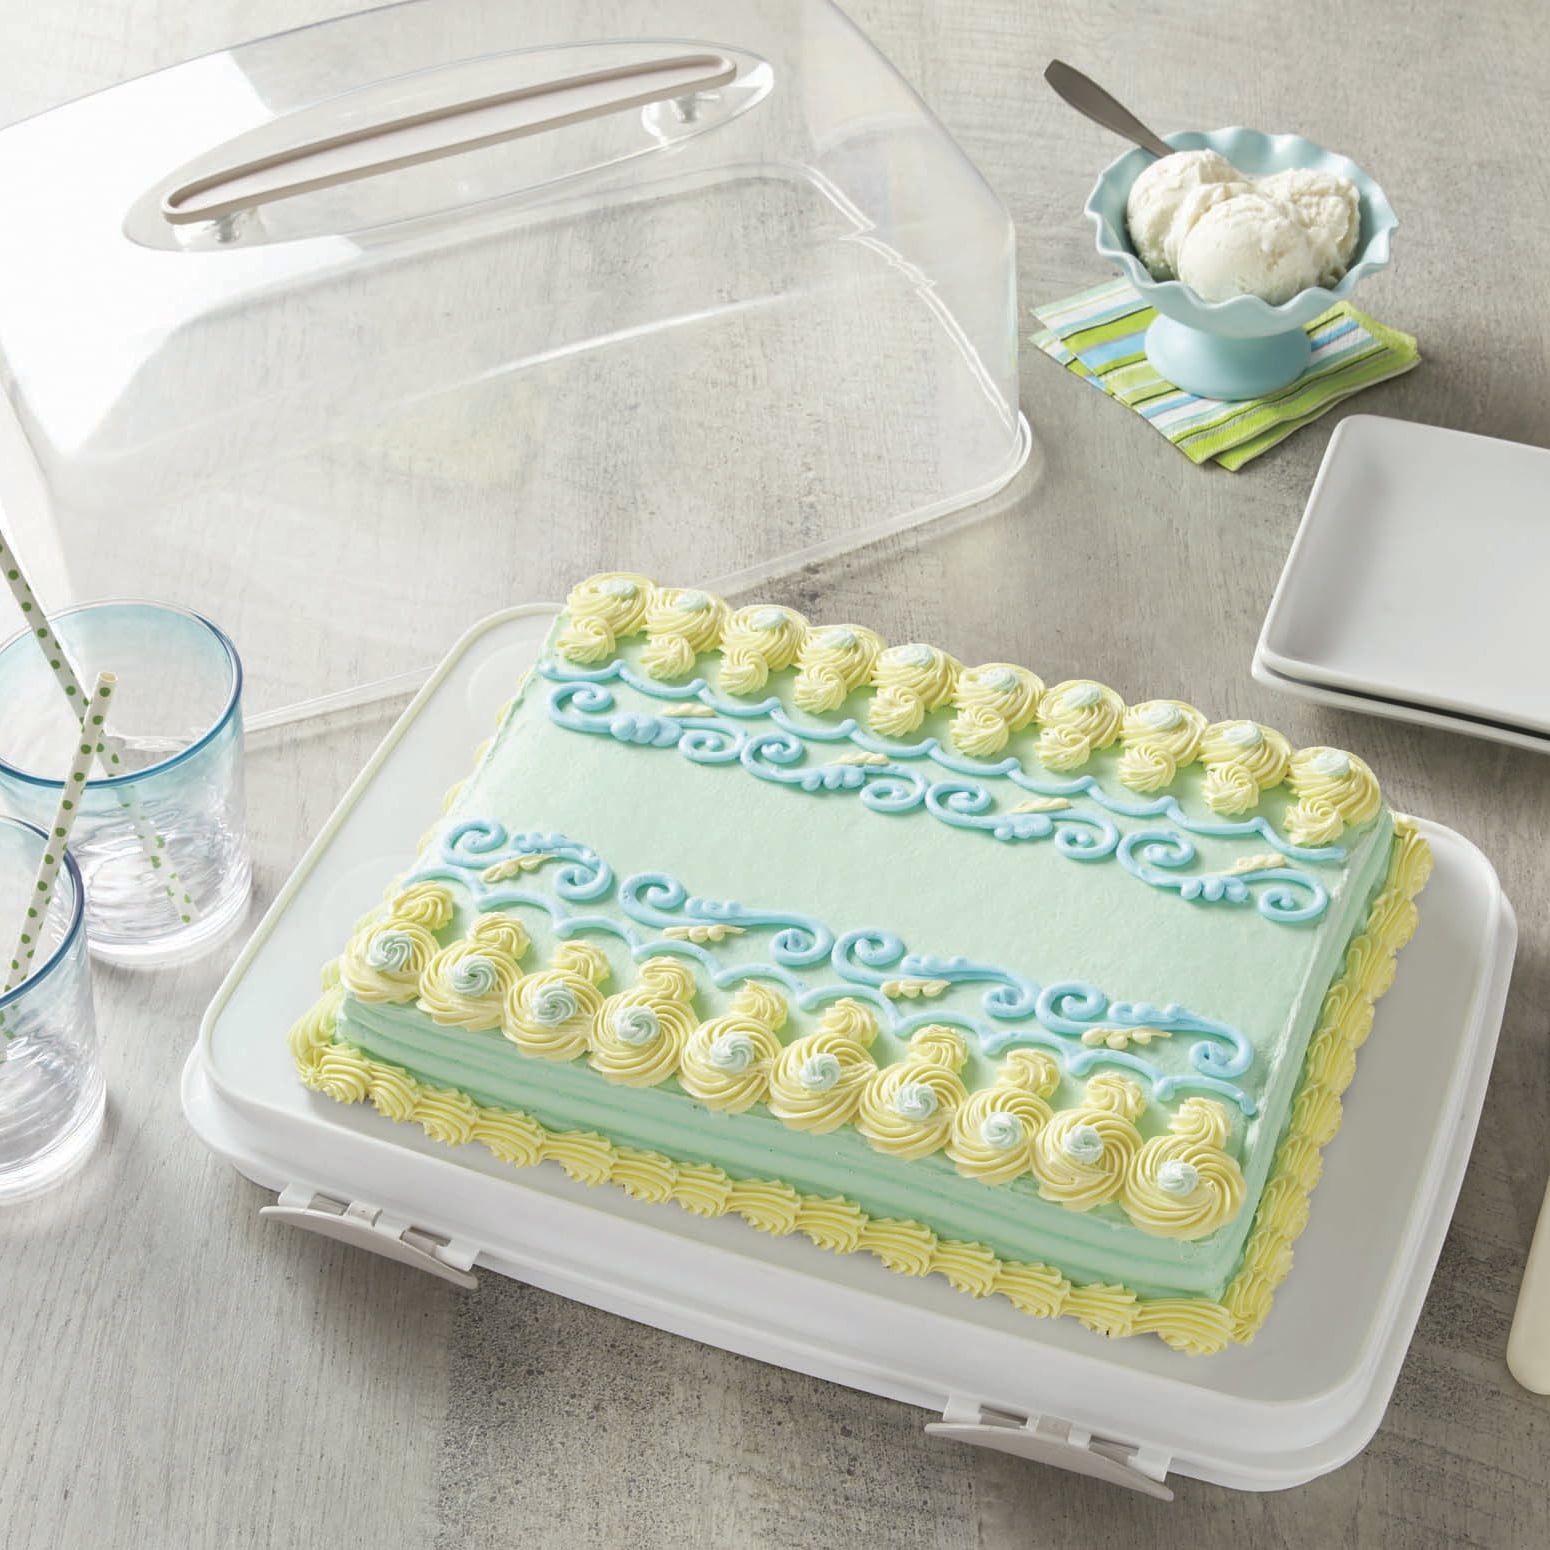 Party Creator White Rectangular Cake Box & Cupcake Carrier White